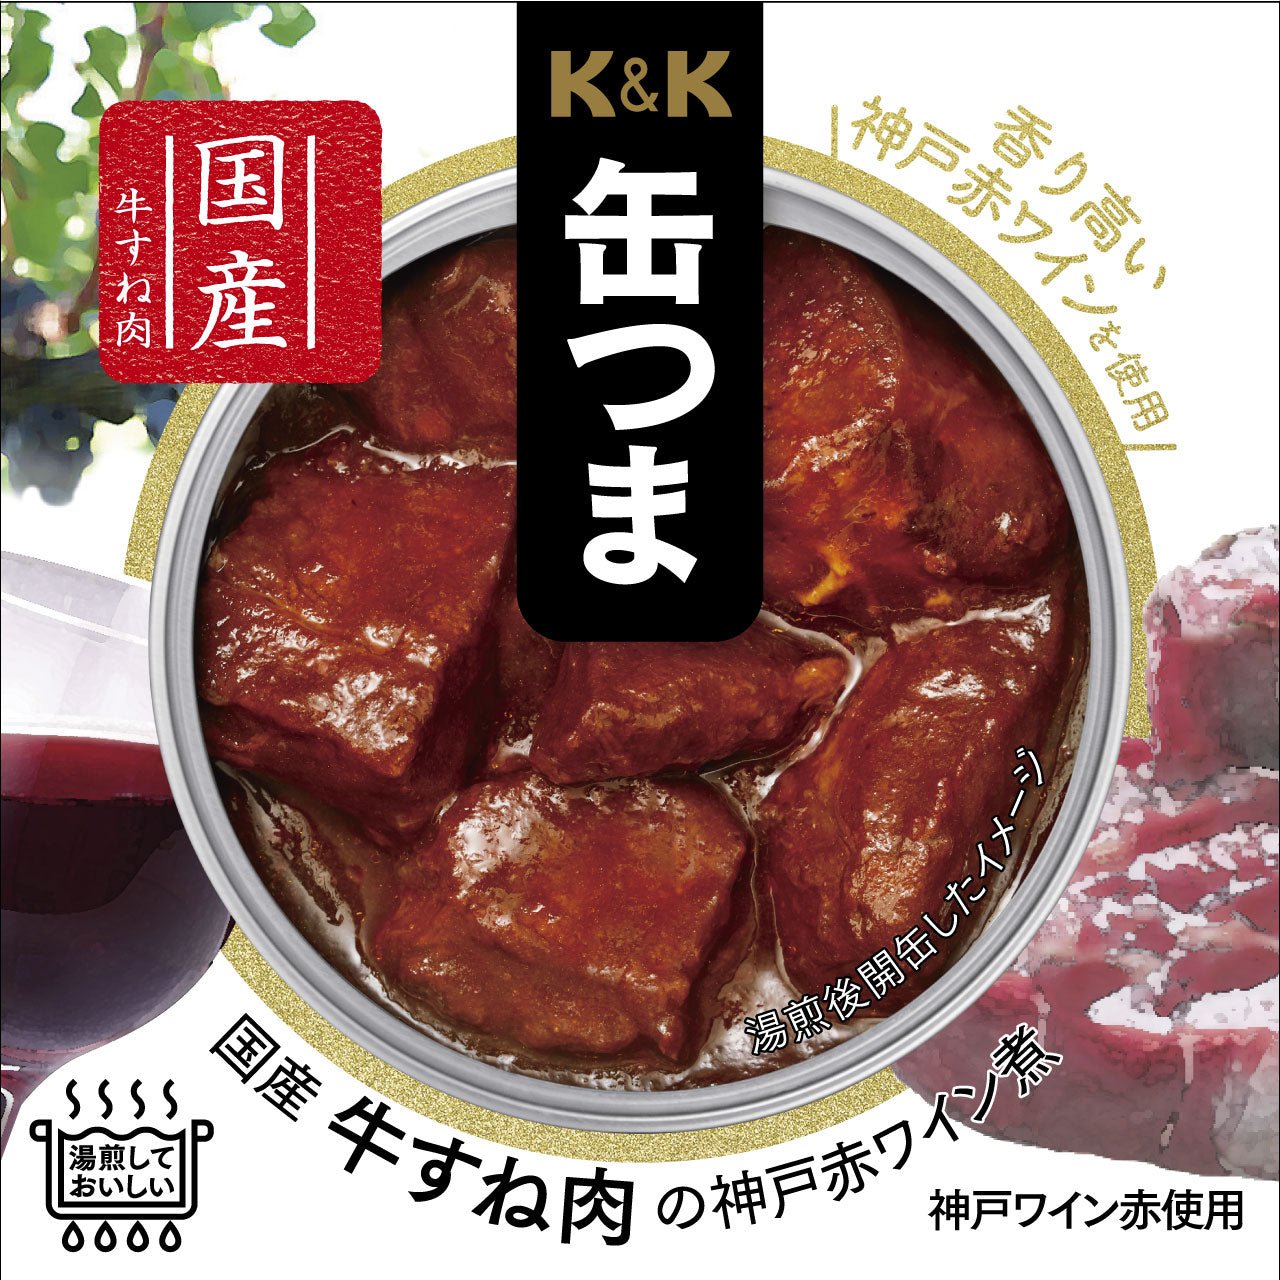 K & K Can Koizuma Domestic beef Sune meat Kobe red wine boiled